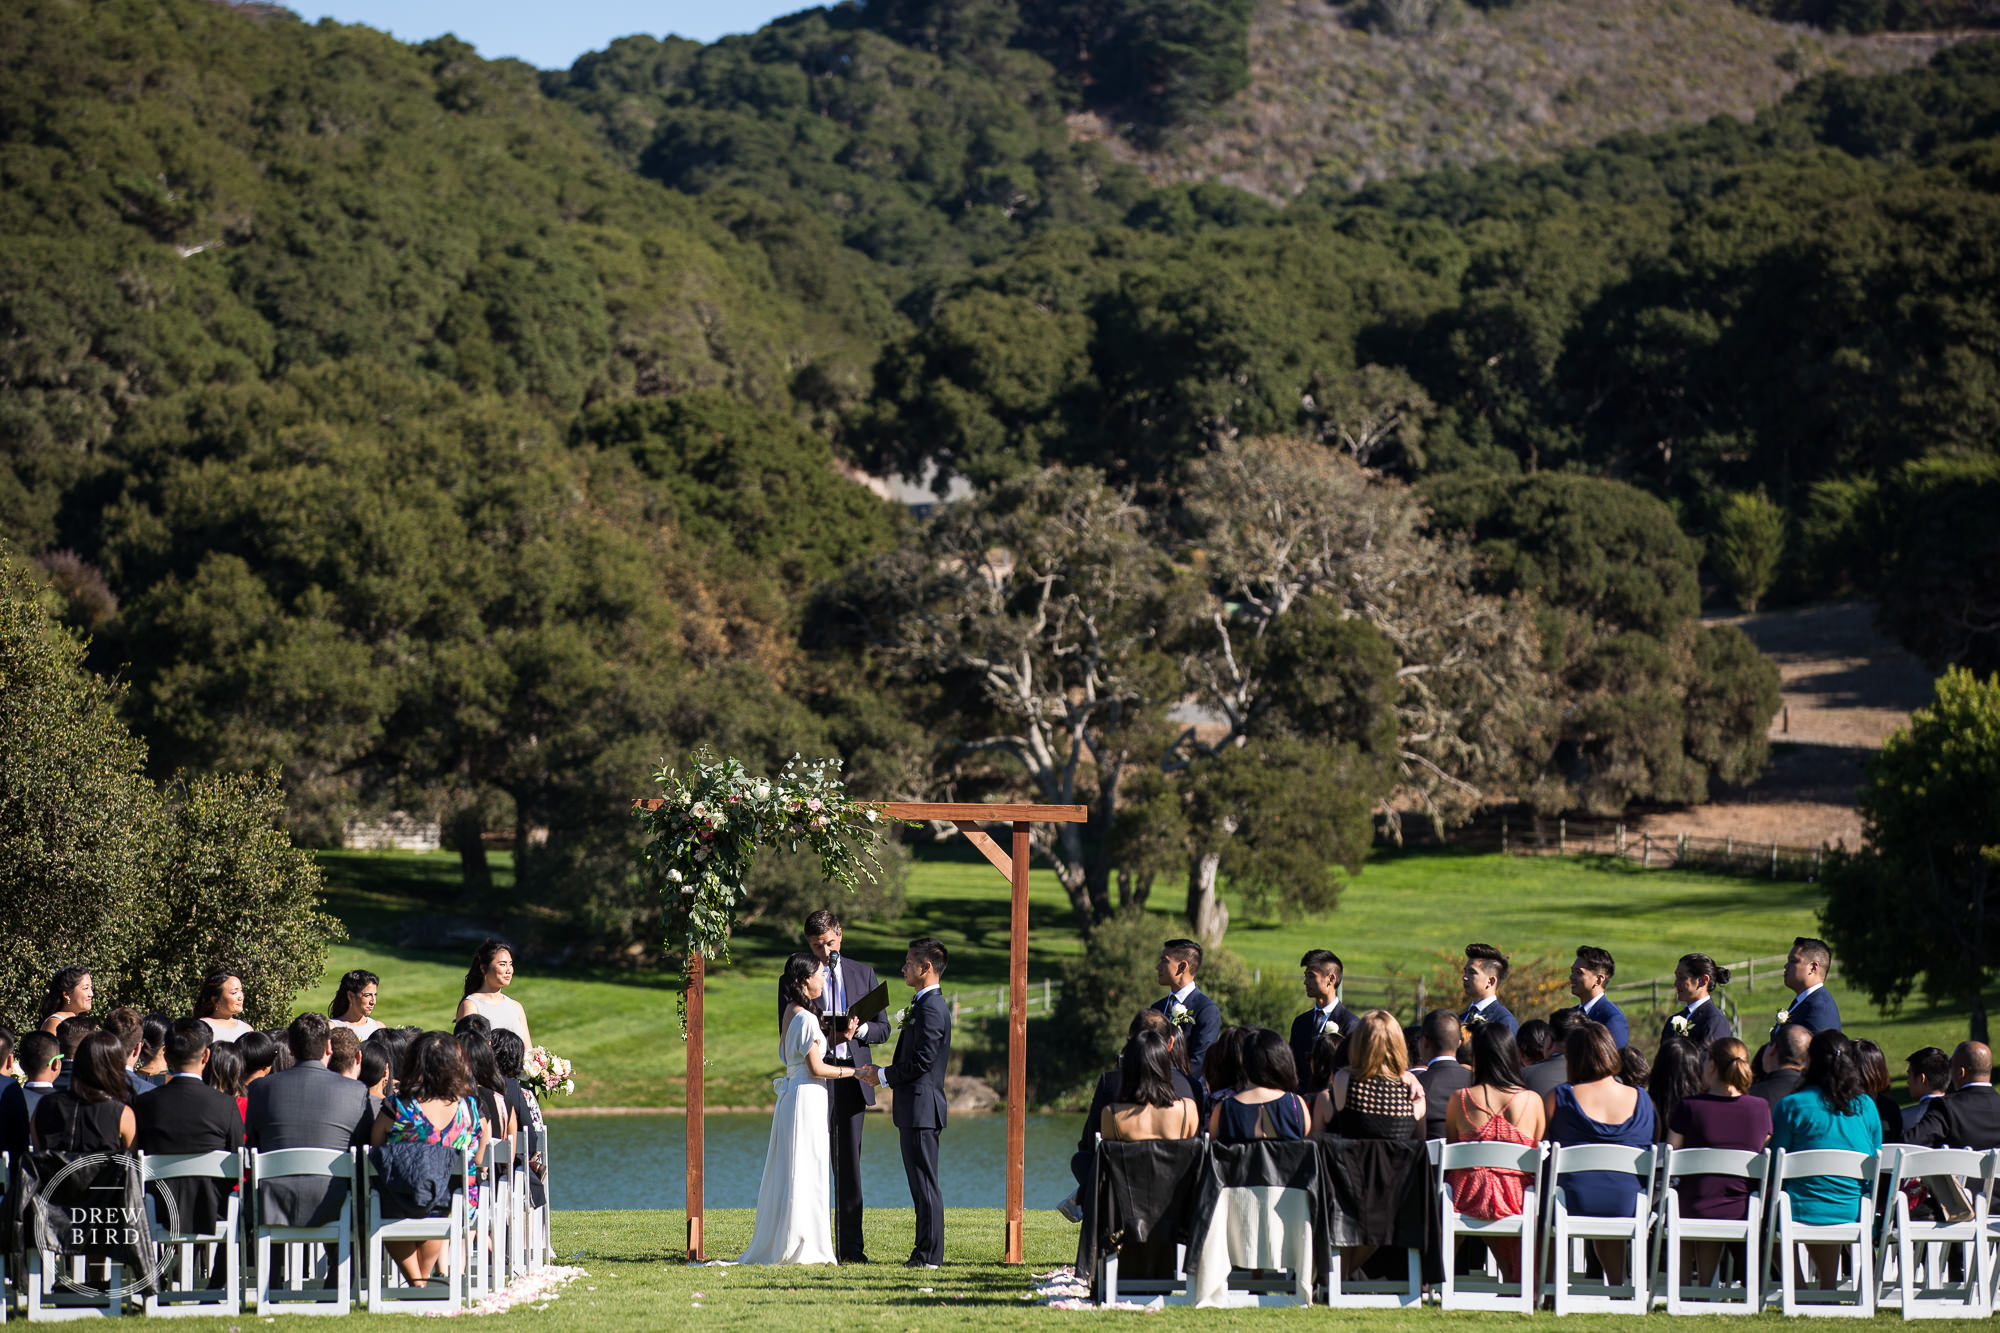 Outdoor wedding ceremony at Quail Lodge in Carmel, California. Big Sur wedding venues.